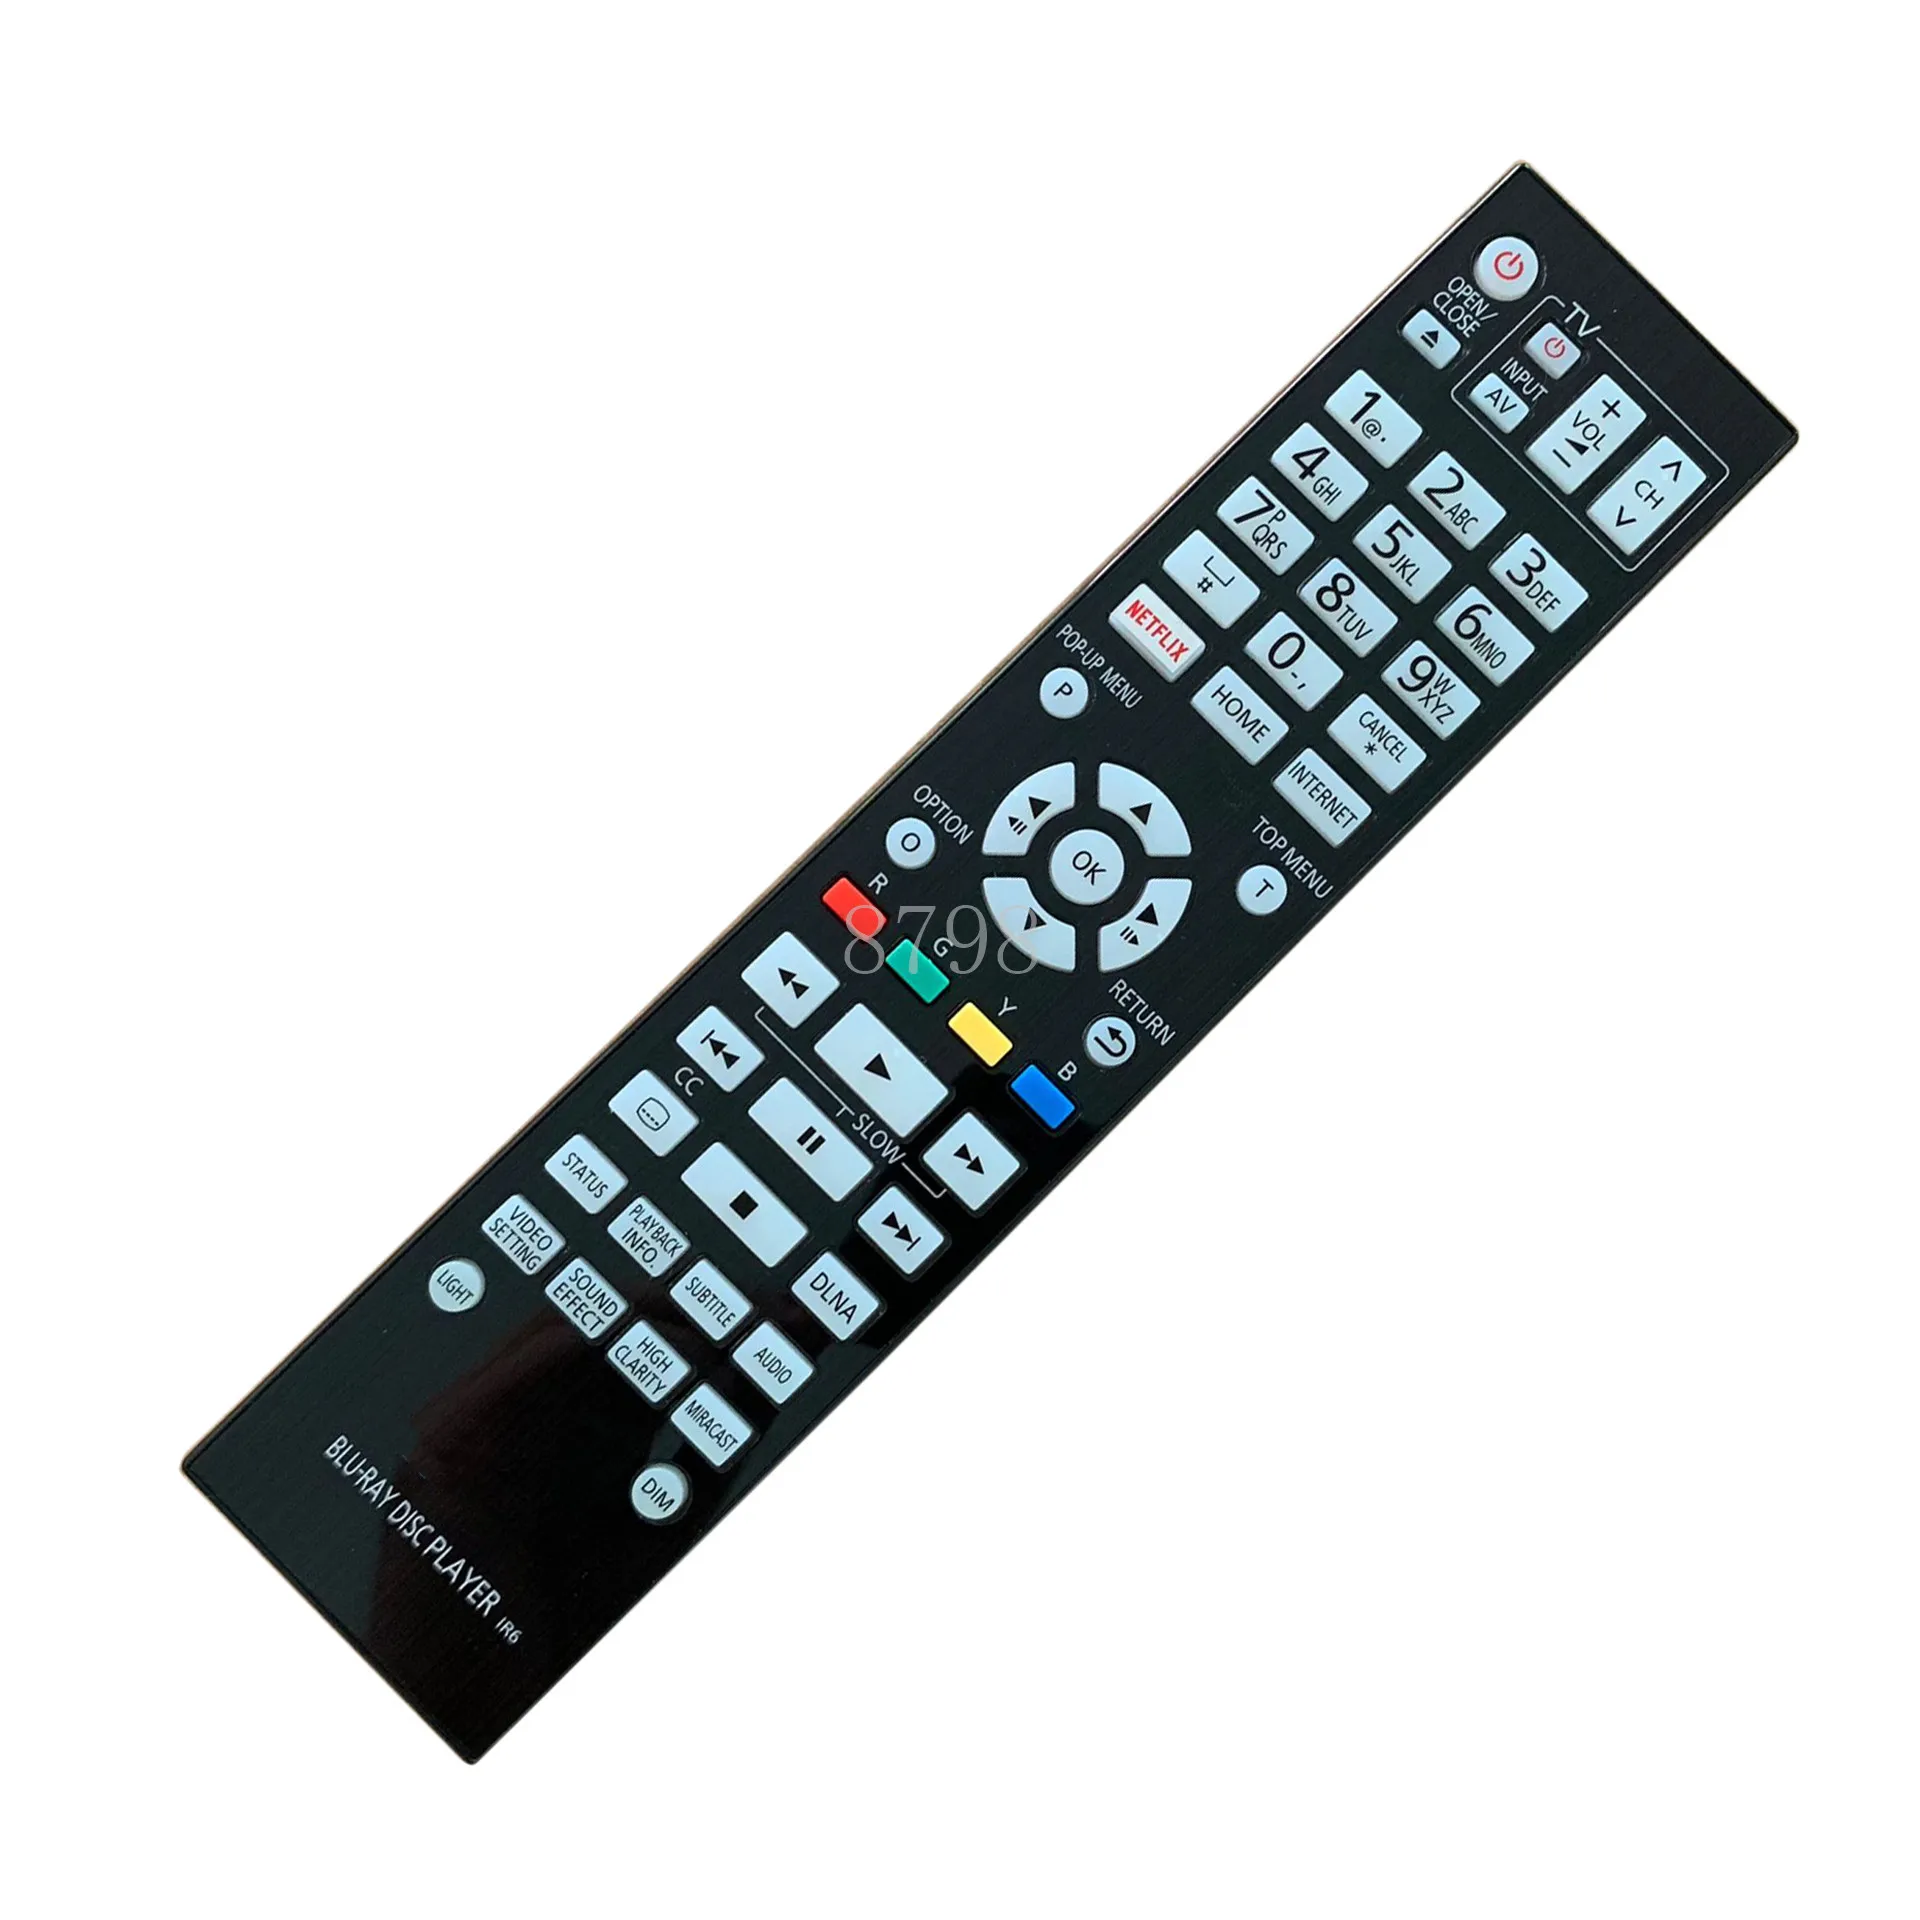 

Original New Remote Control Suitable For Panasonic N2QAYA000130 N2QAYA000128 DMP-UB900GN UB900 Ultra HD Blu-ray DVD Player